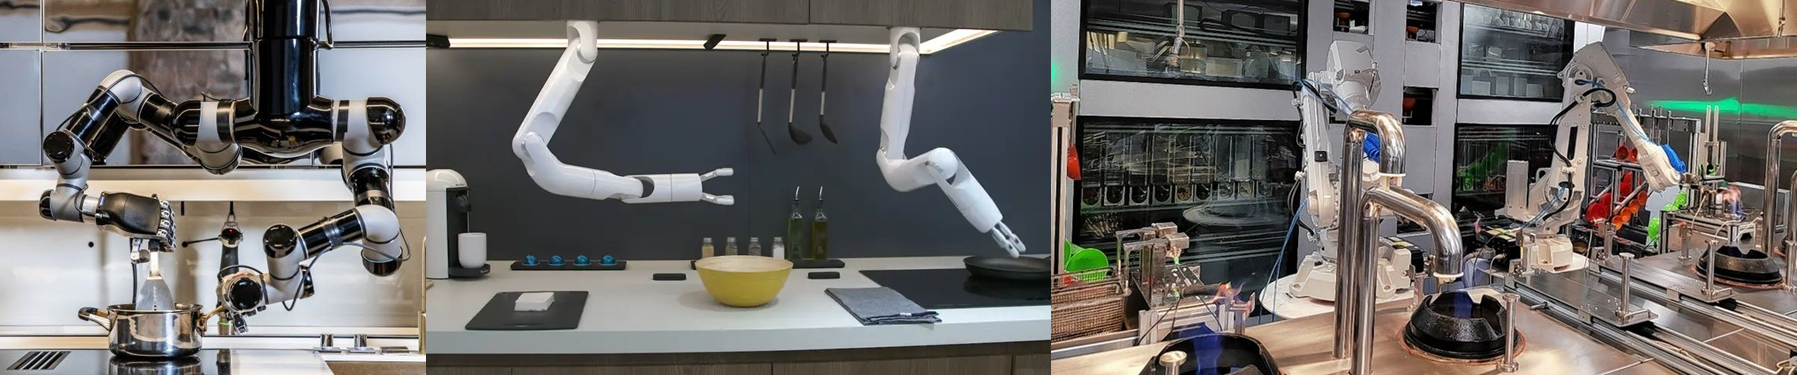 A Fully Automated Self Cleaning Dishwashing Robot - Nala Robotics